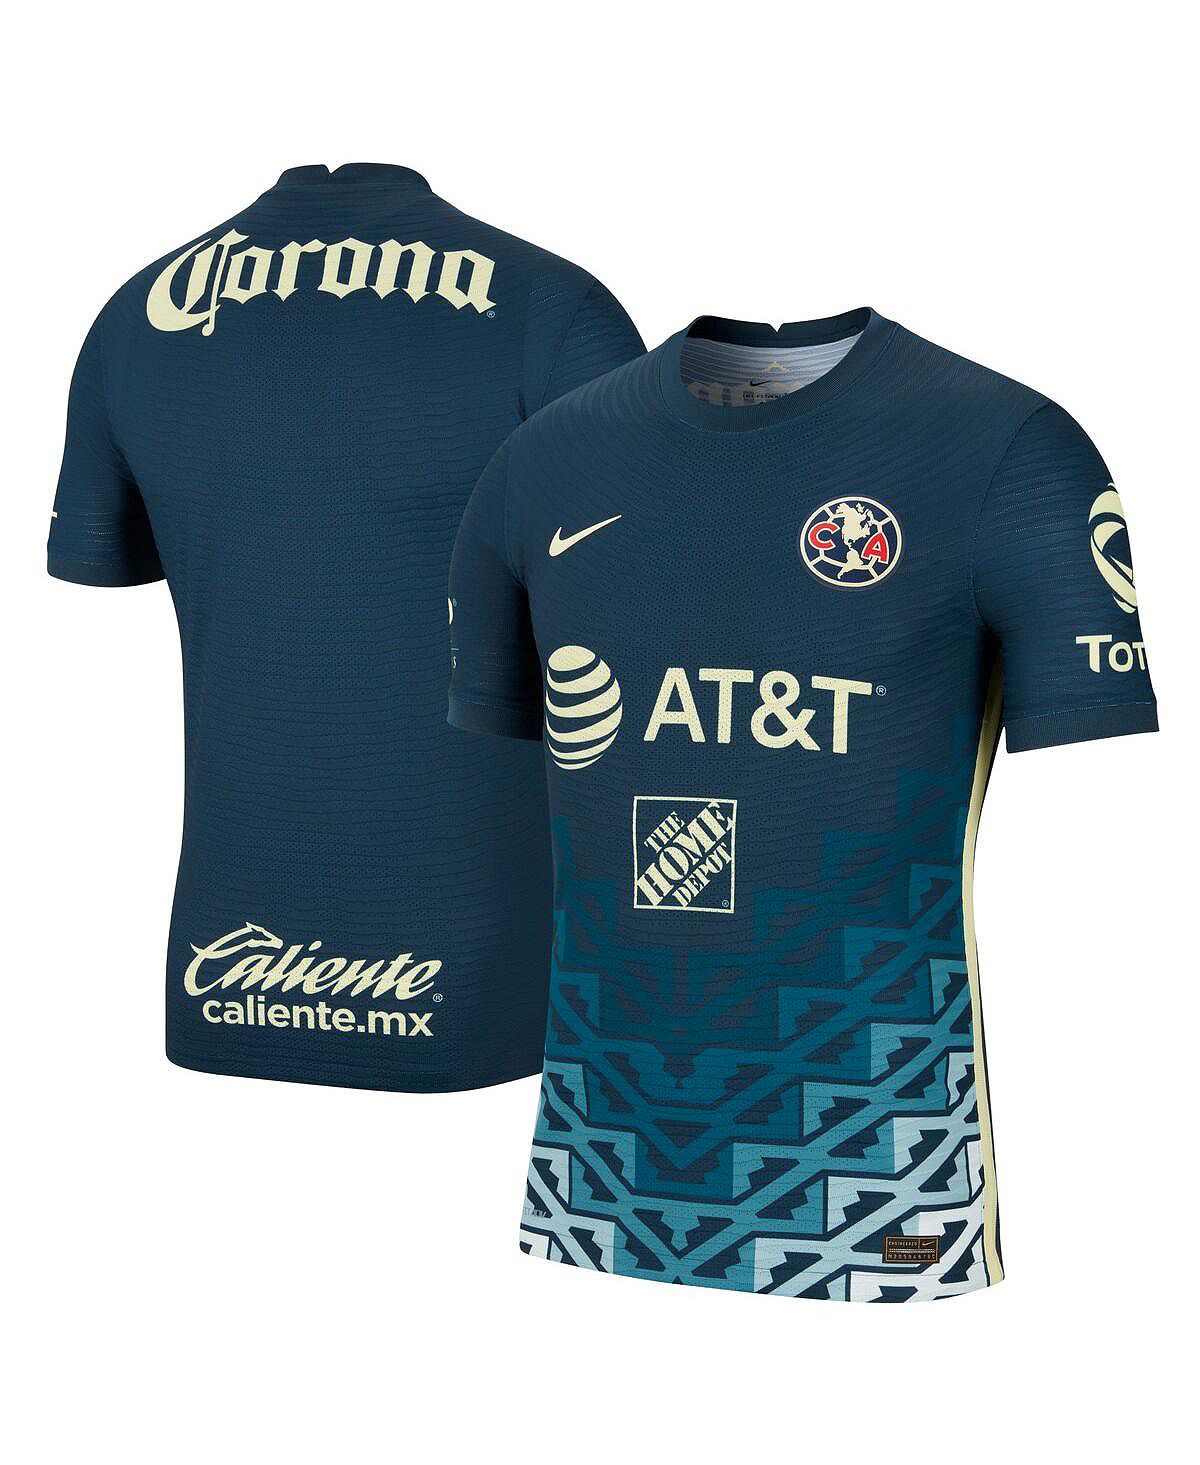 Мужская футболка navy club america 2021/22 away vapor match authentic jersey Nike, синий